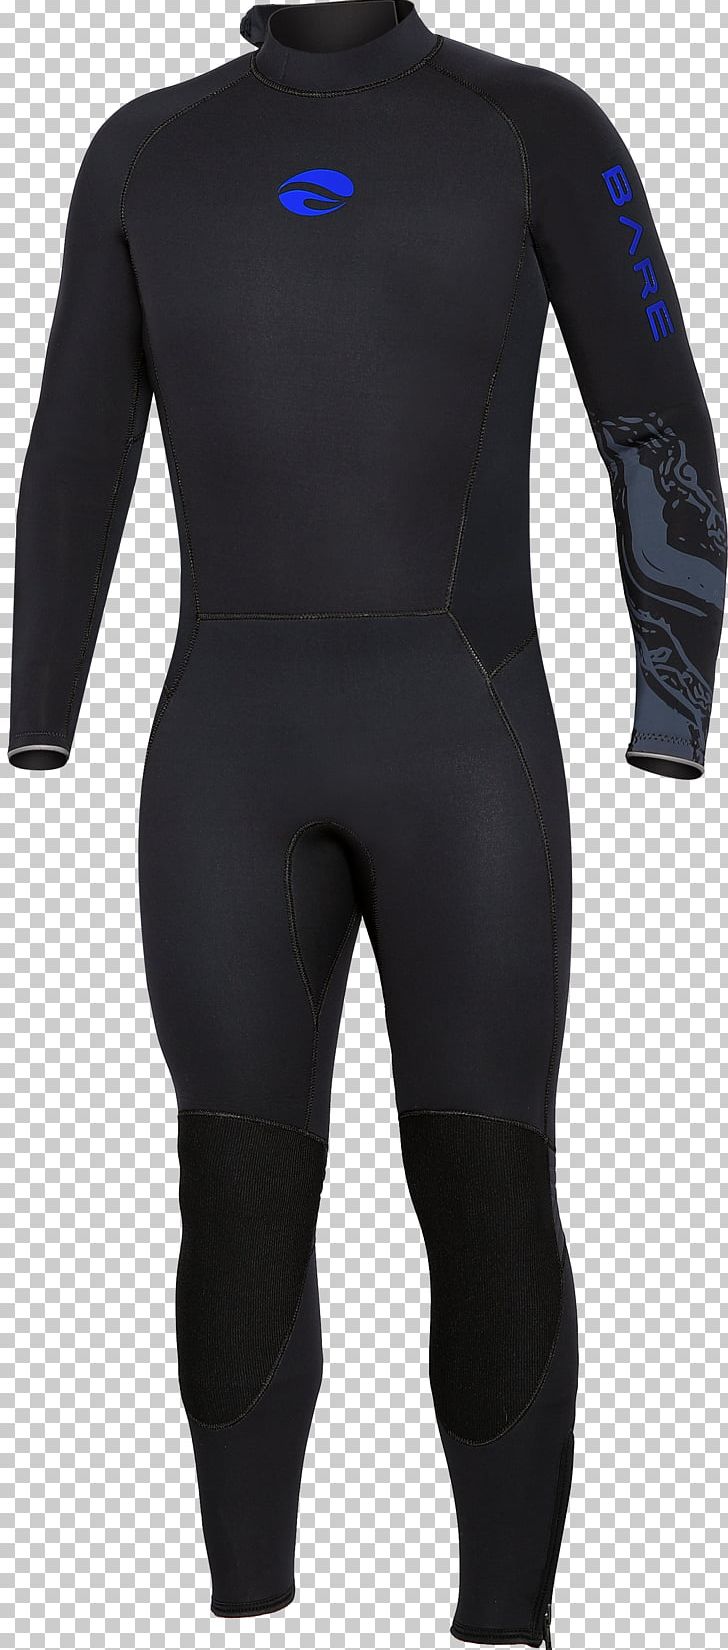 Wetsuit Dry Suit Buoyancy Compensators Underwater Diving O'Neill PNG, Clipart, Buoyancy, Buoyancy Compensators, Diver, Diving Suit, Dry Suit Free PNG Download